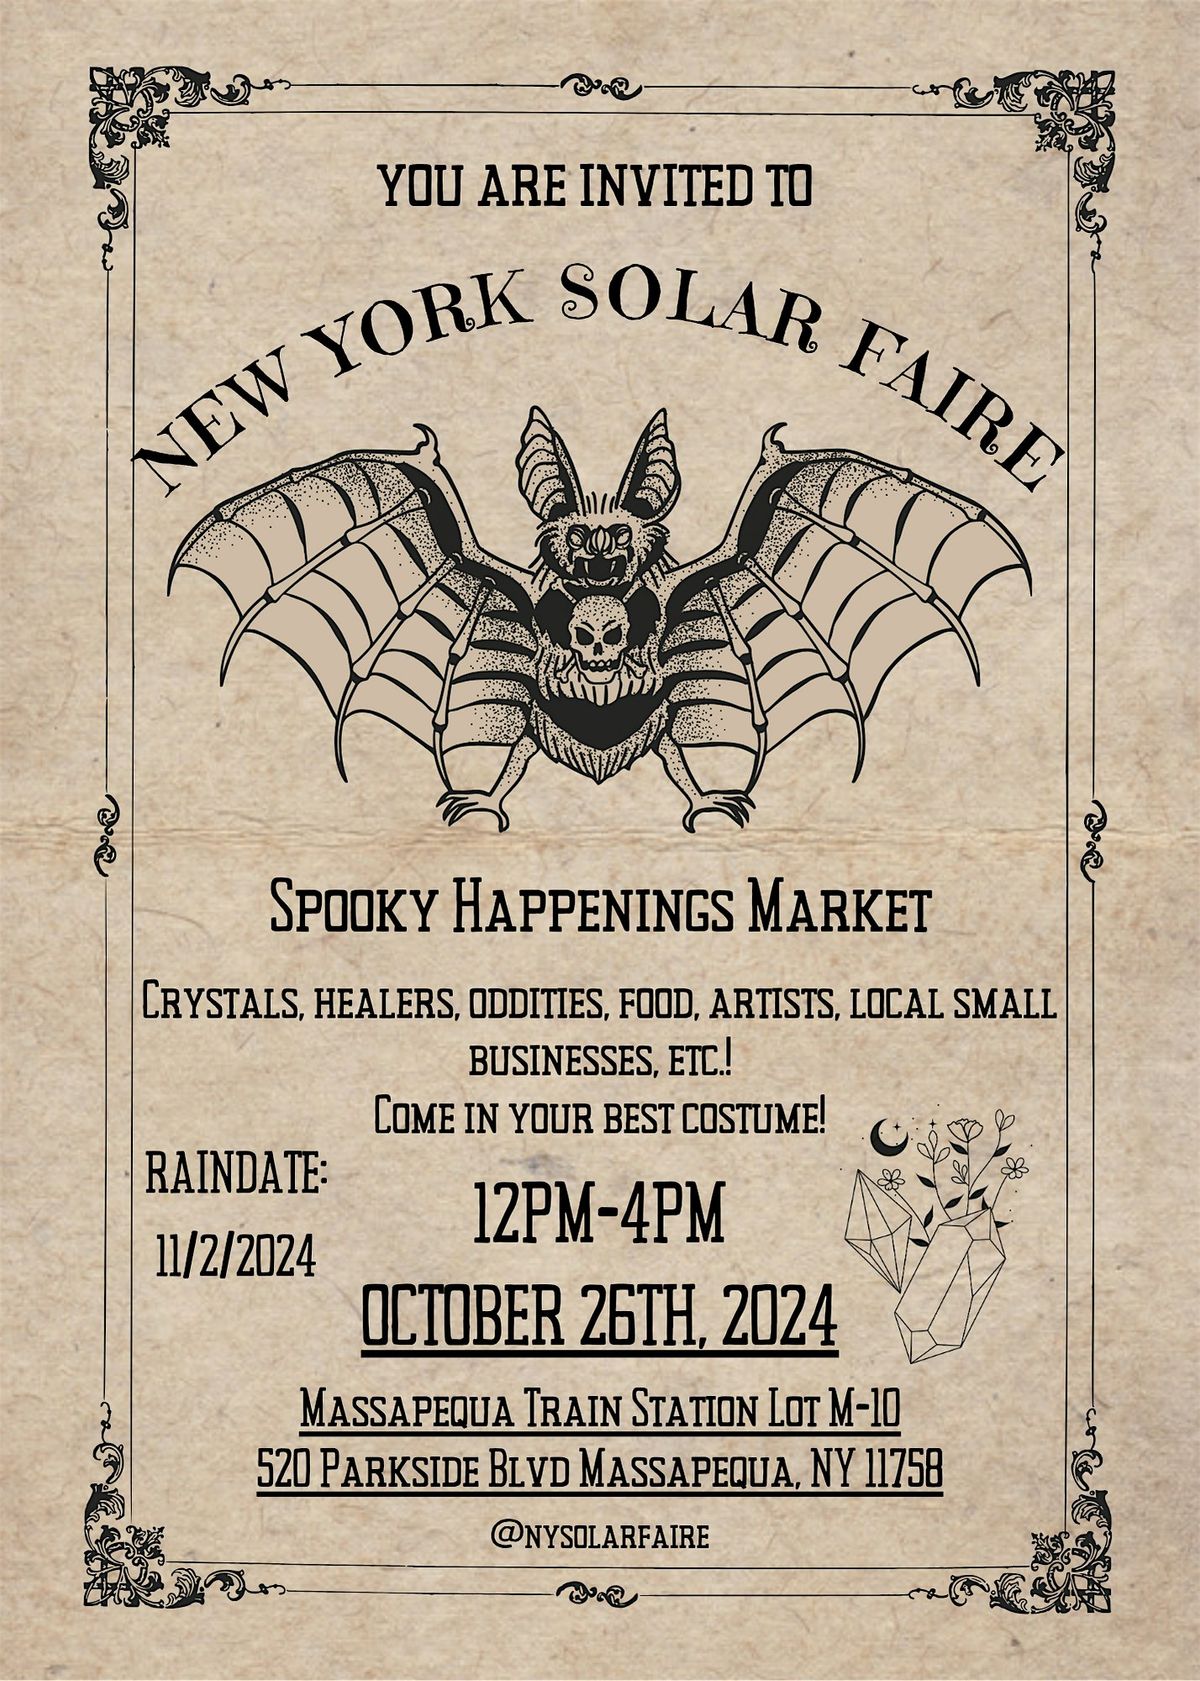 NYSF Spooky Happenings Market